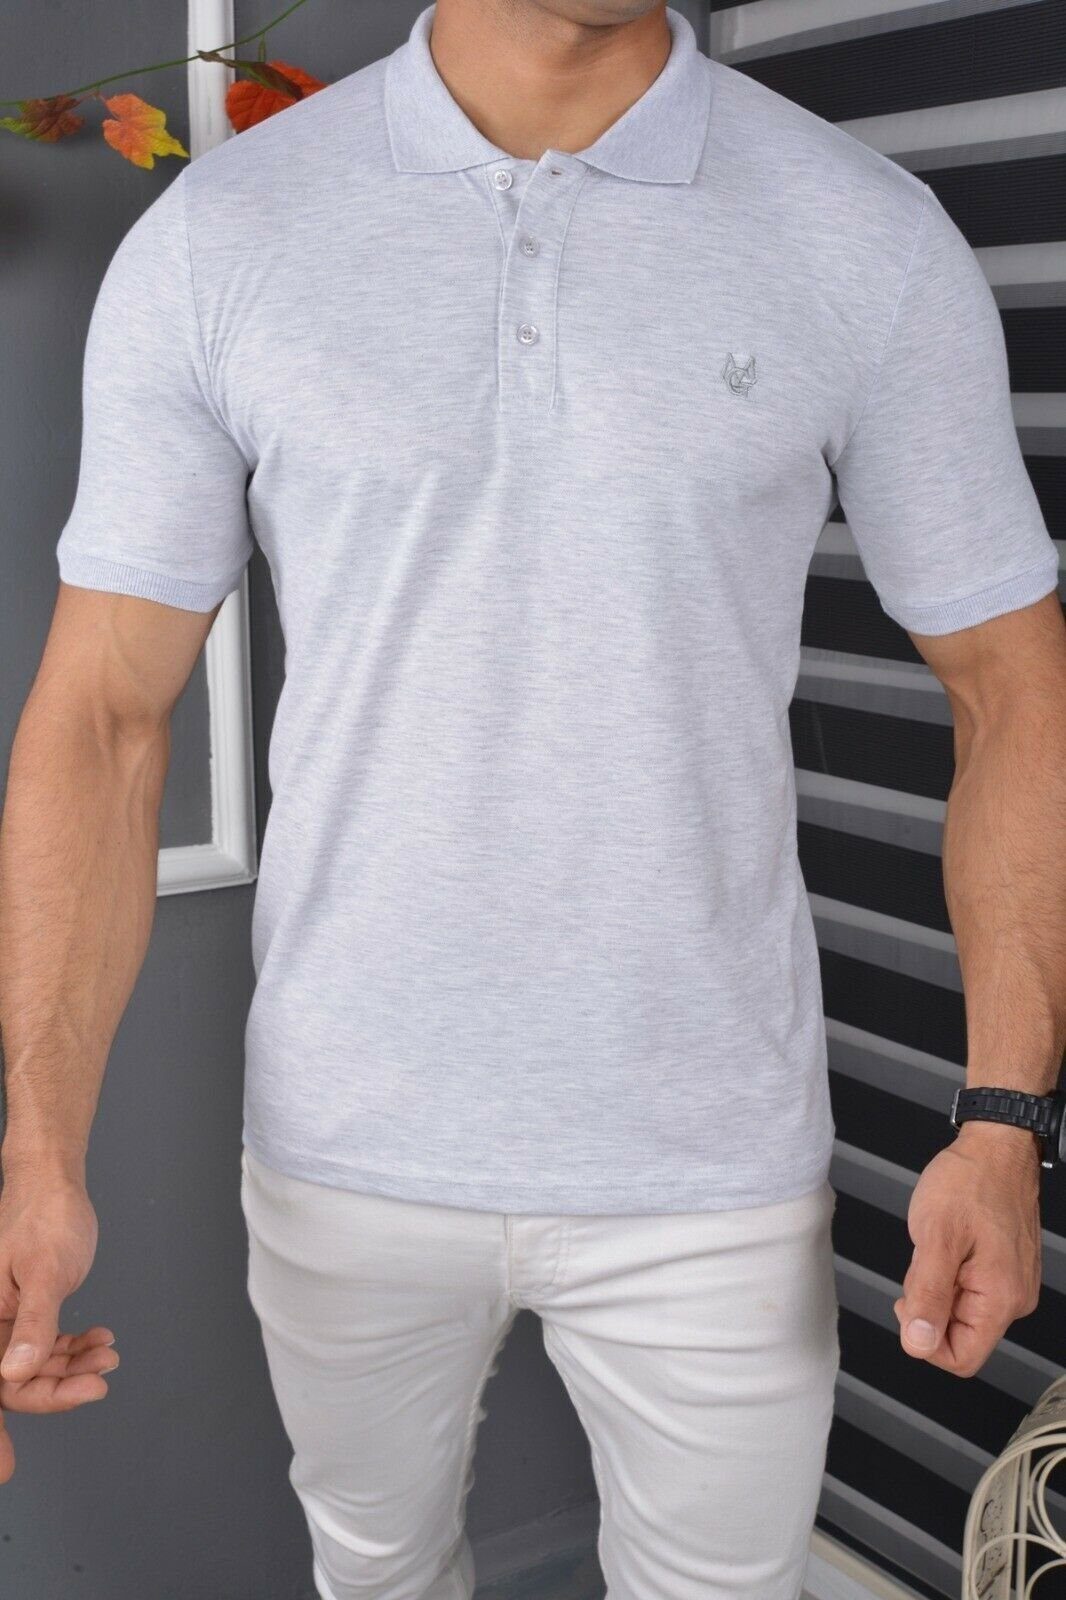 Herren Grau Golf Kurzarm Sports Megaman Outdoor Jeans Sommer Polo Poloshirt Shirts Tennis